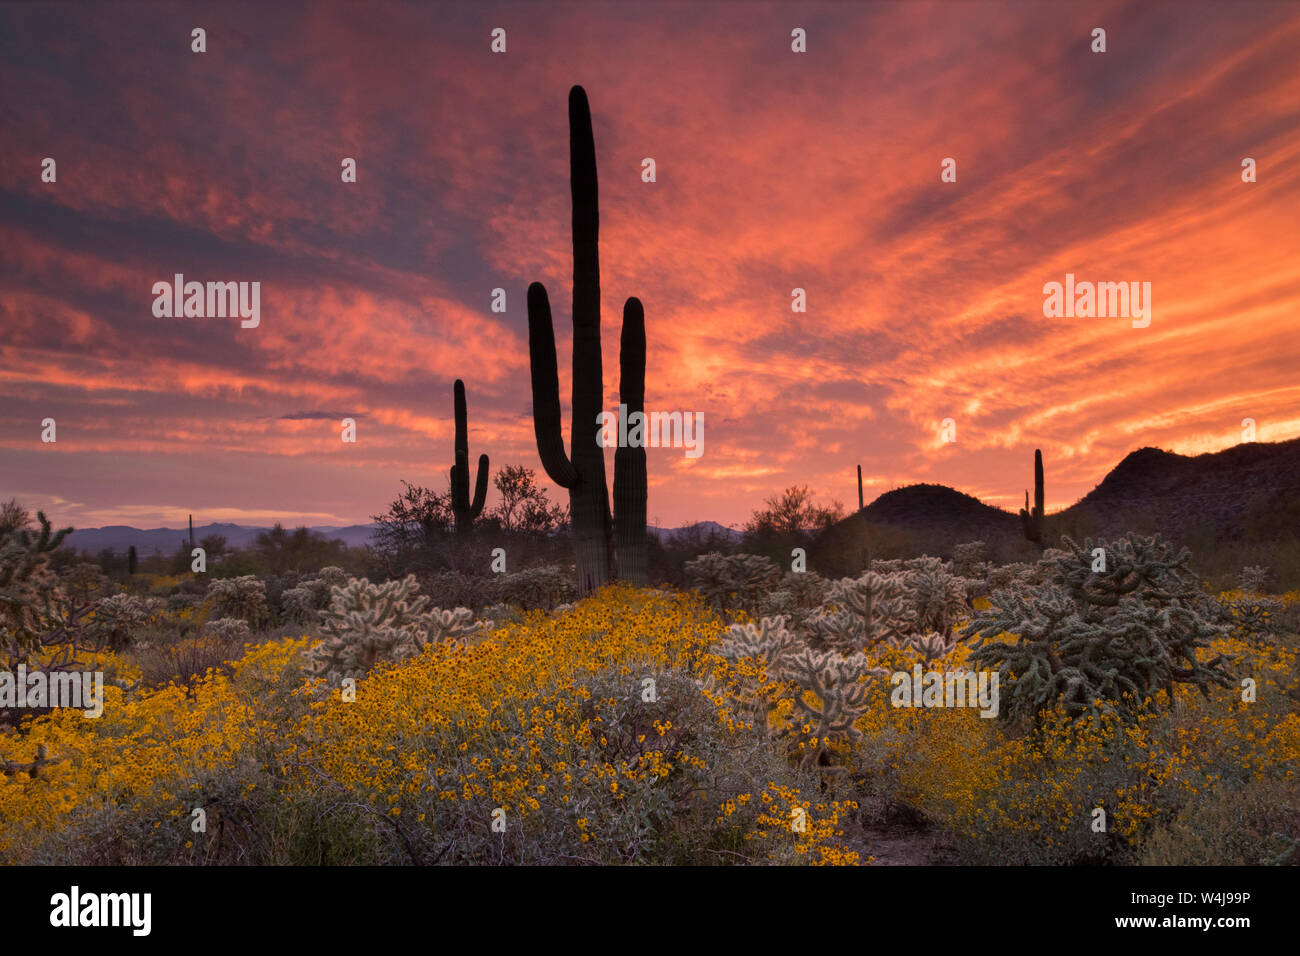 Deserto Sonoran tramonto, Arizona. Foto Stock